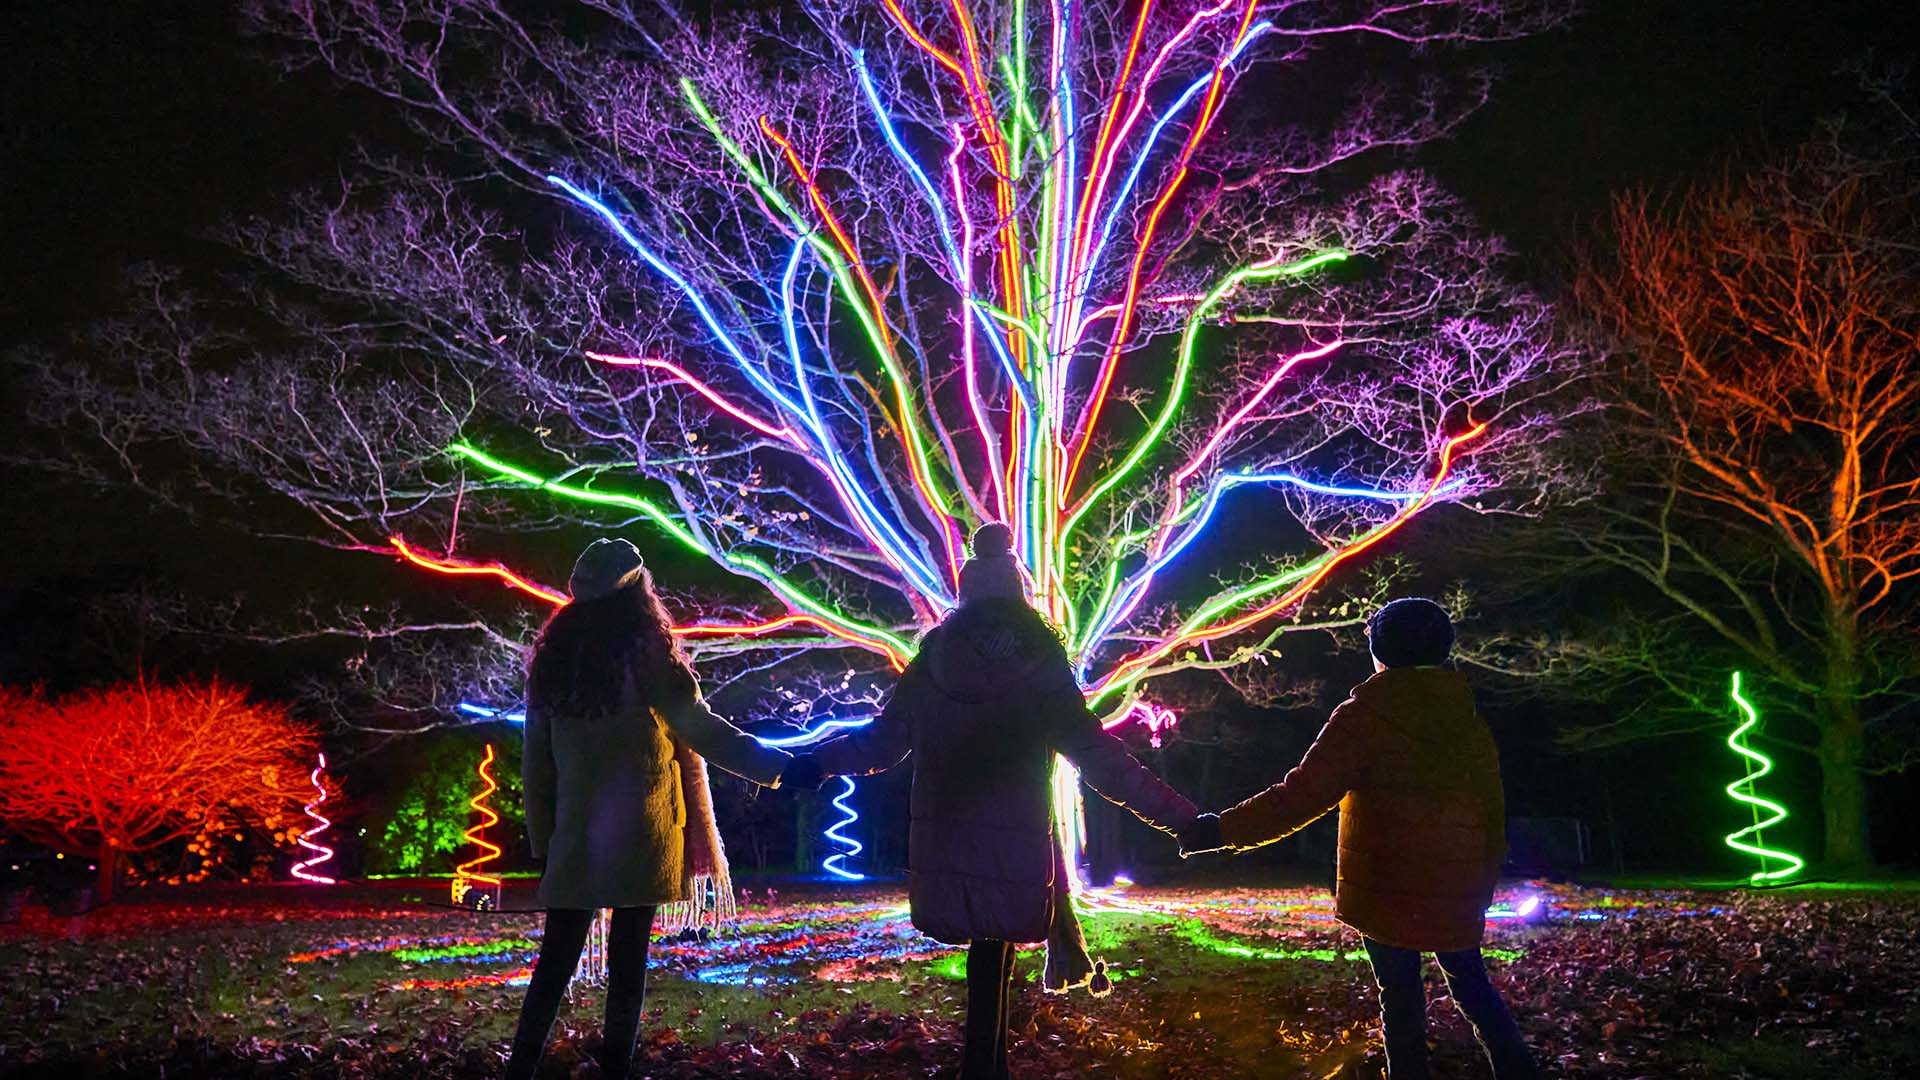 After-Dark Light Festival Lightscape Will Brighten Up the Brisbane City Botanic Gardens This Spring